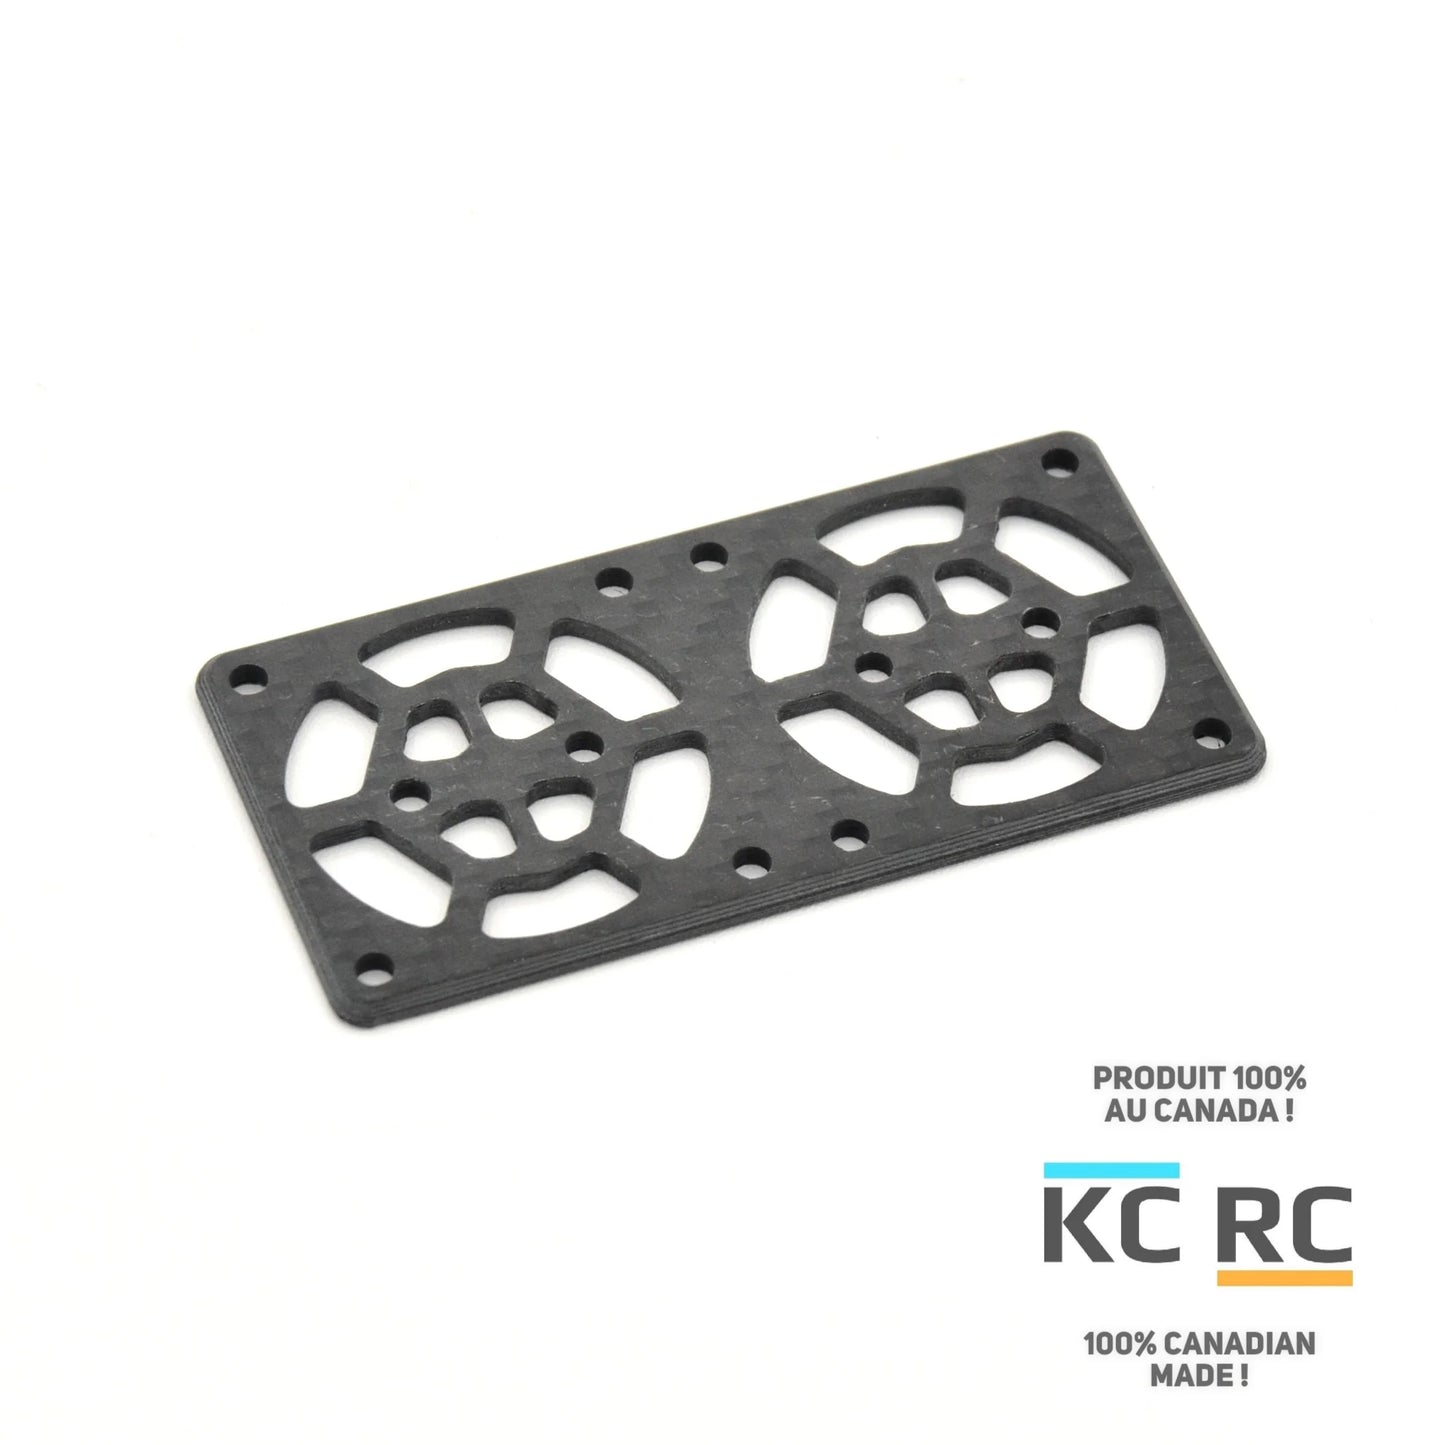 KC RC Dual fan aluminum top